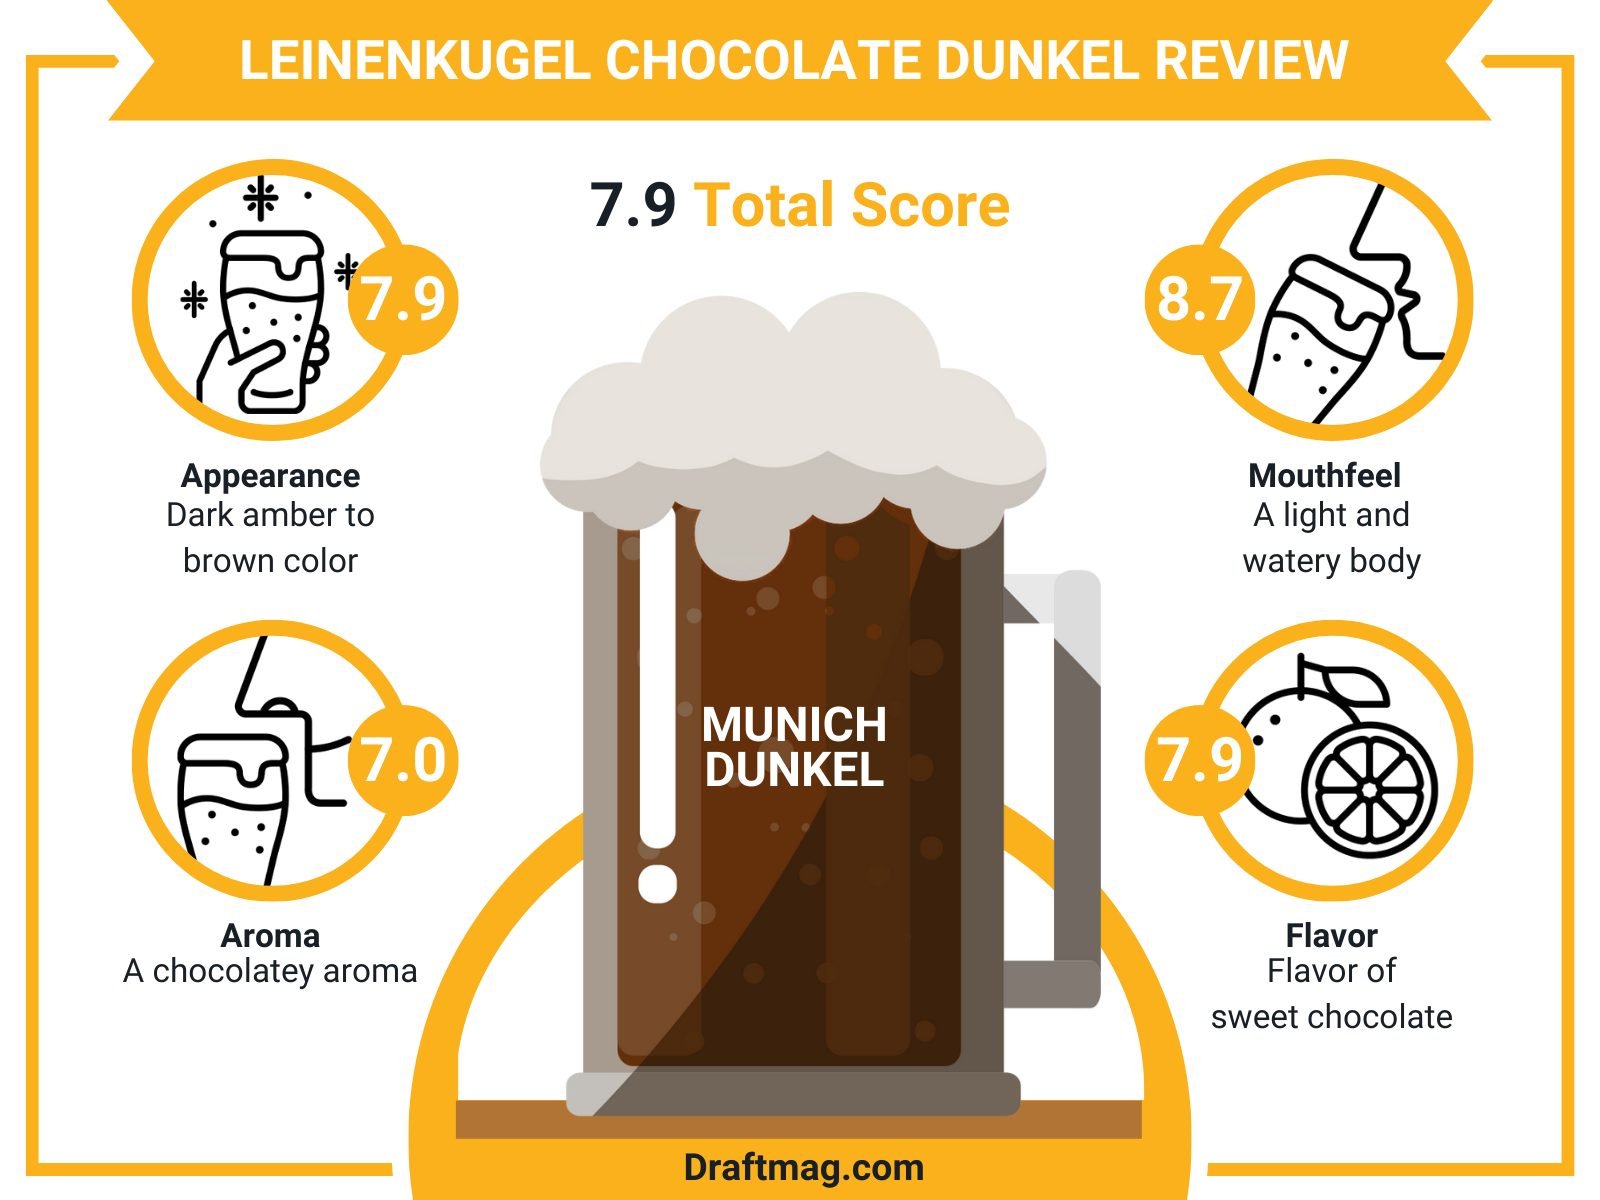 Leinenkugel Chocolate Review Infographic